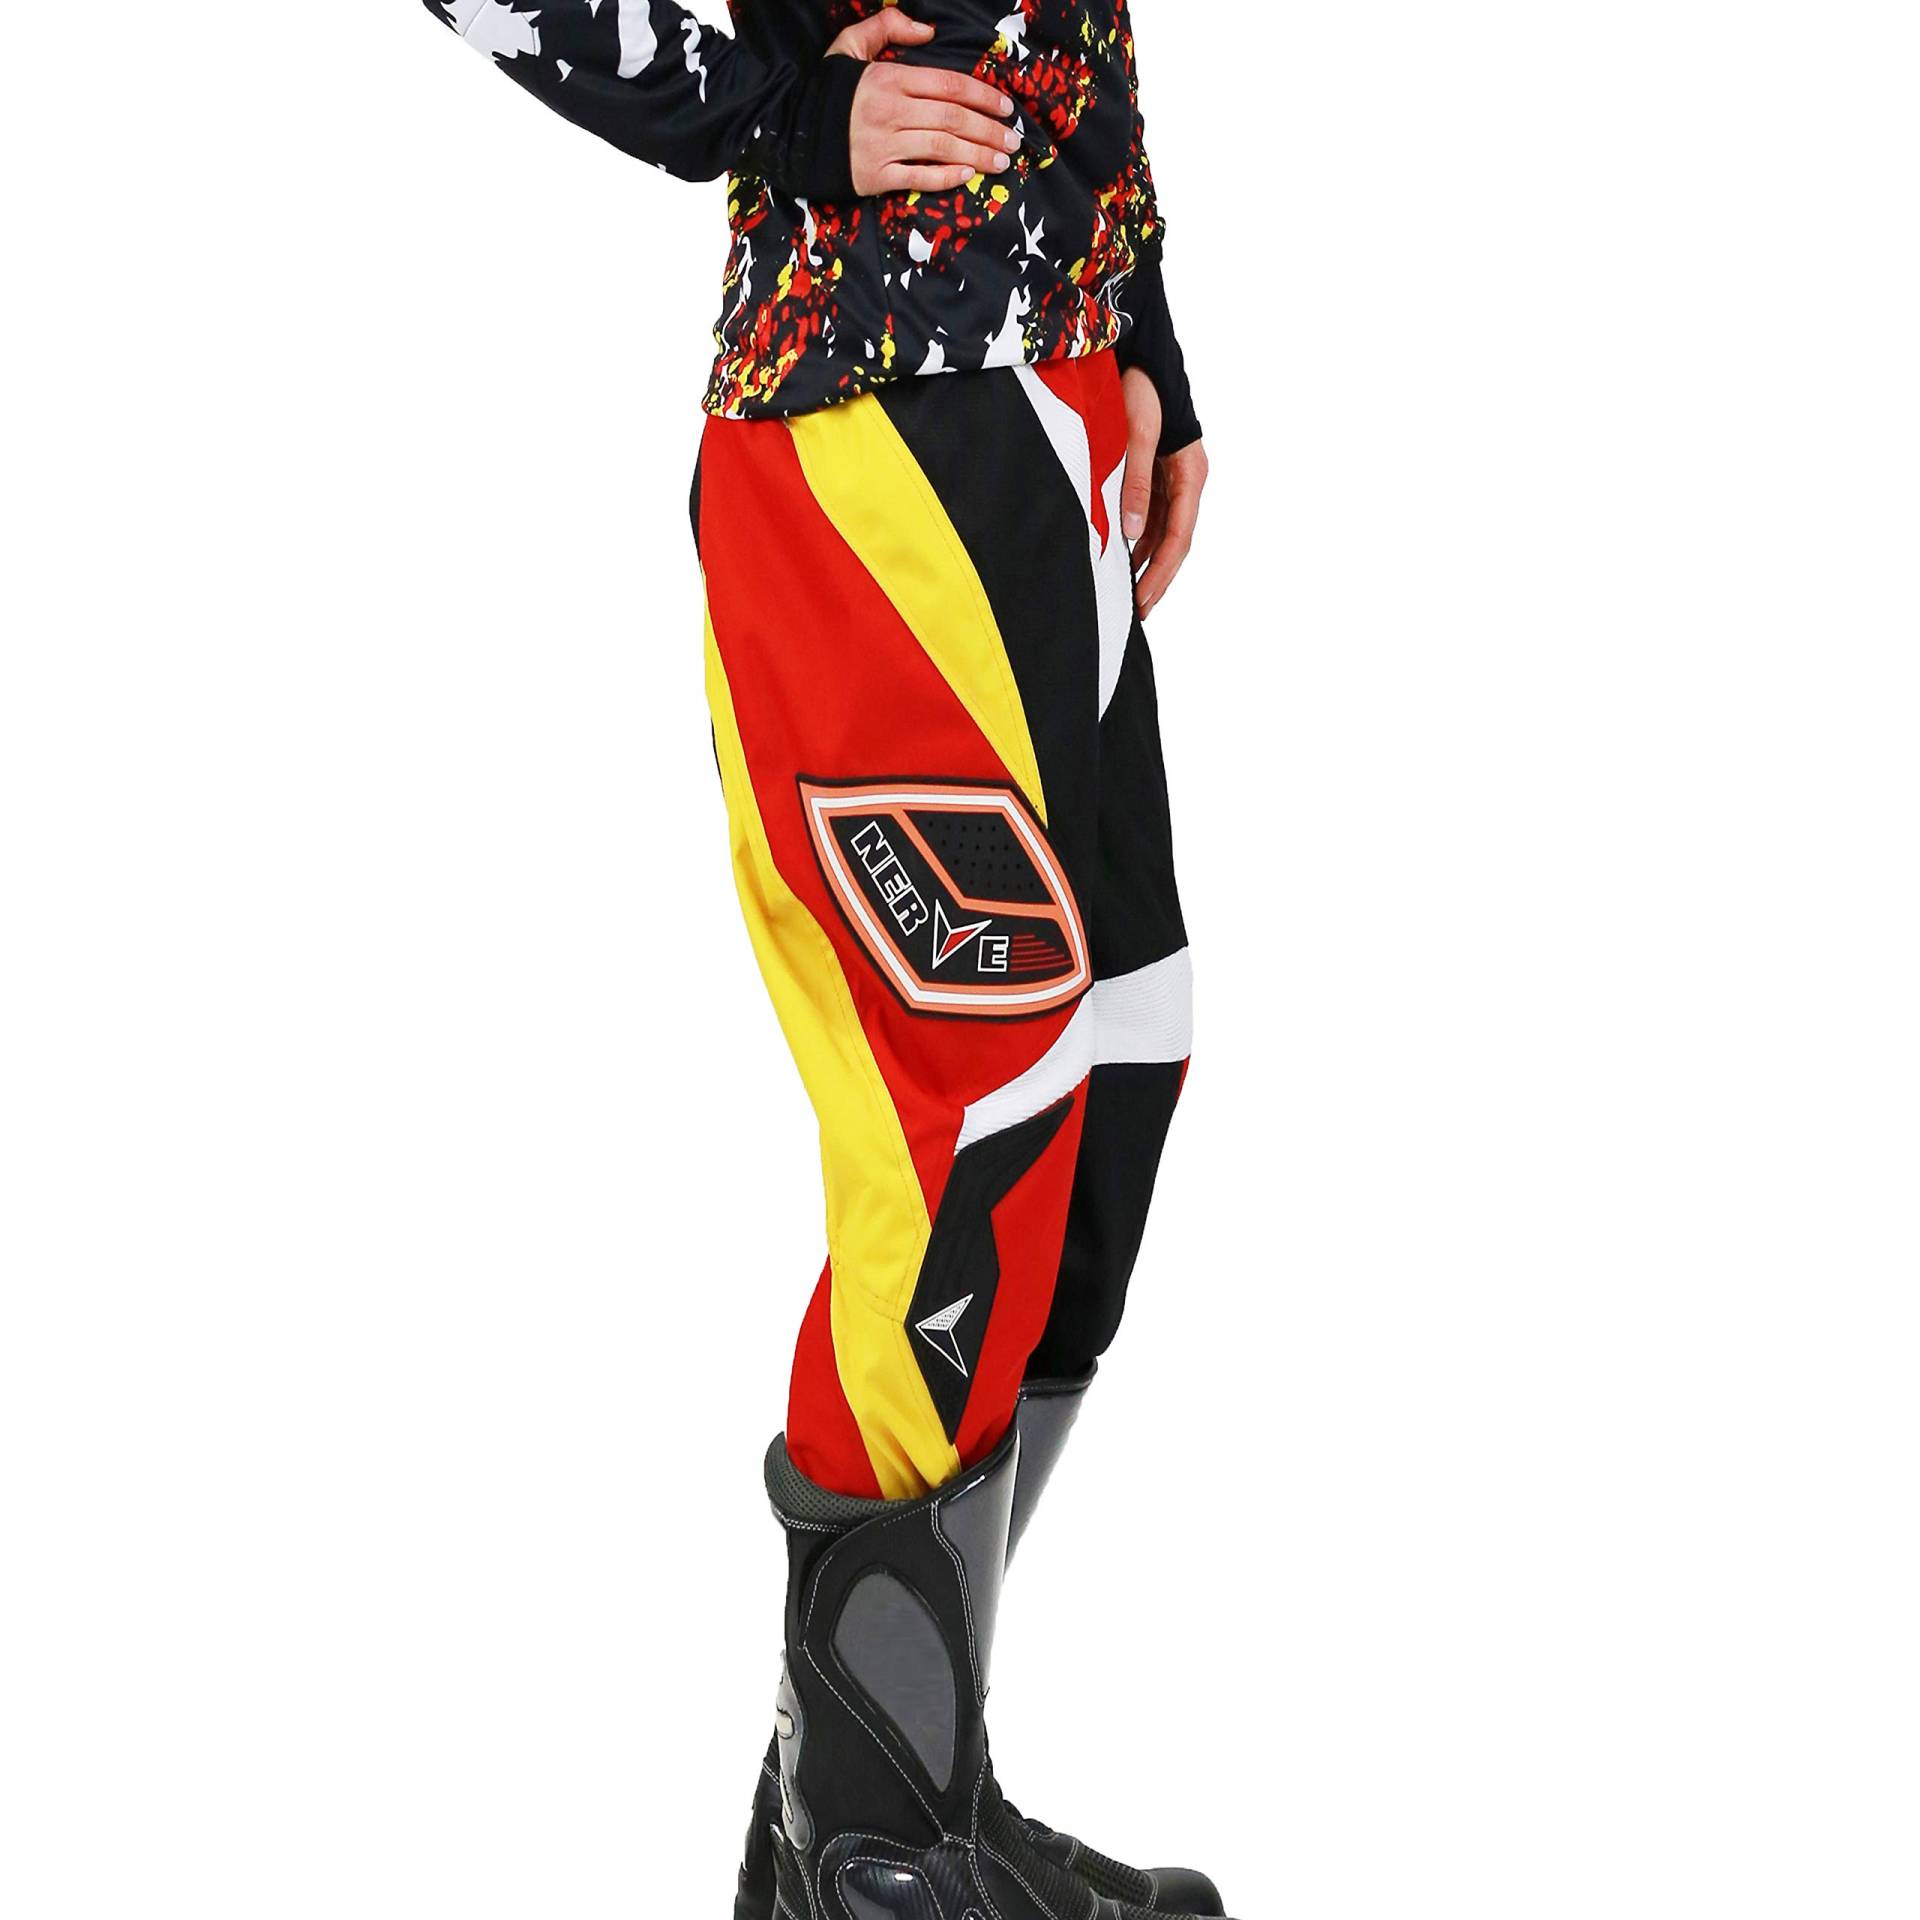 Nerve Shop Motocross Enduro Offroad Quad Cross Hose Herren Damen - schwarz-rot - L von Nerve Shop